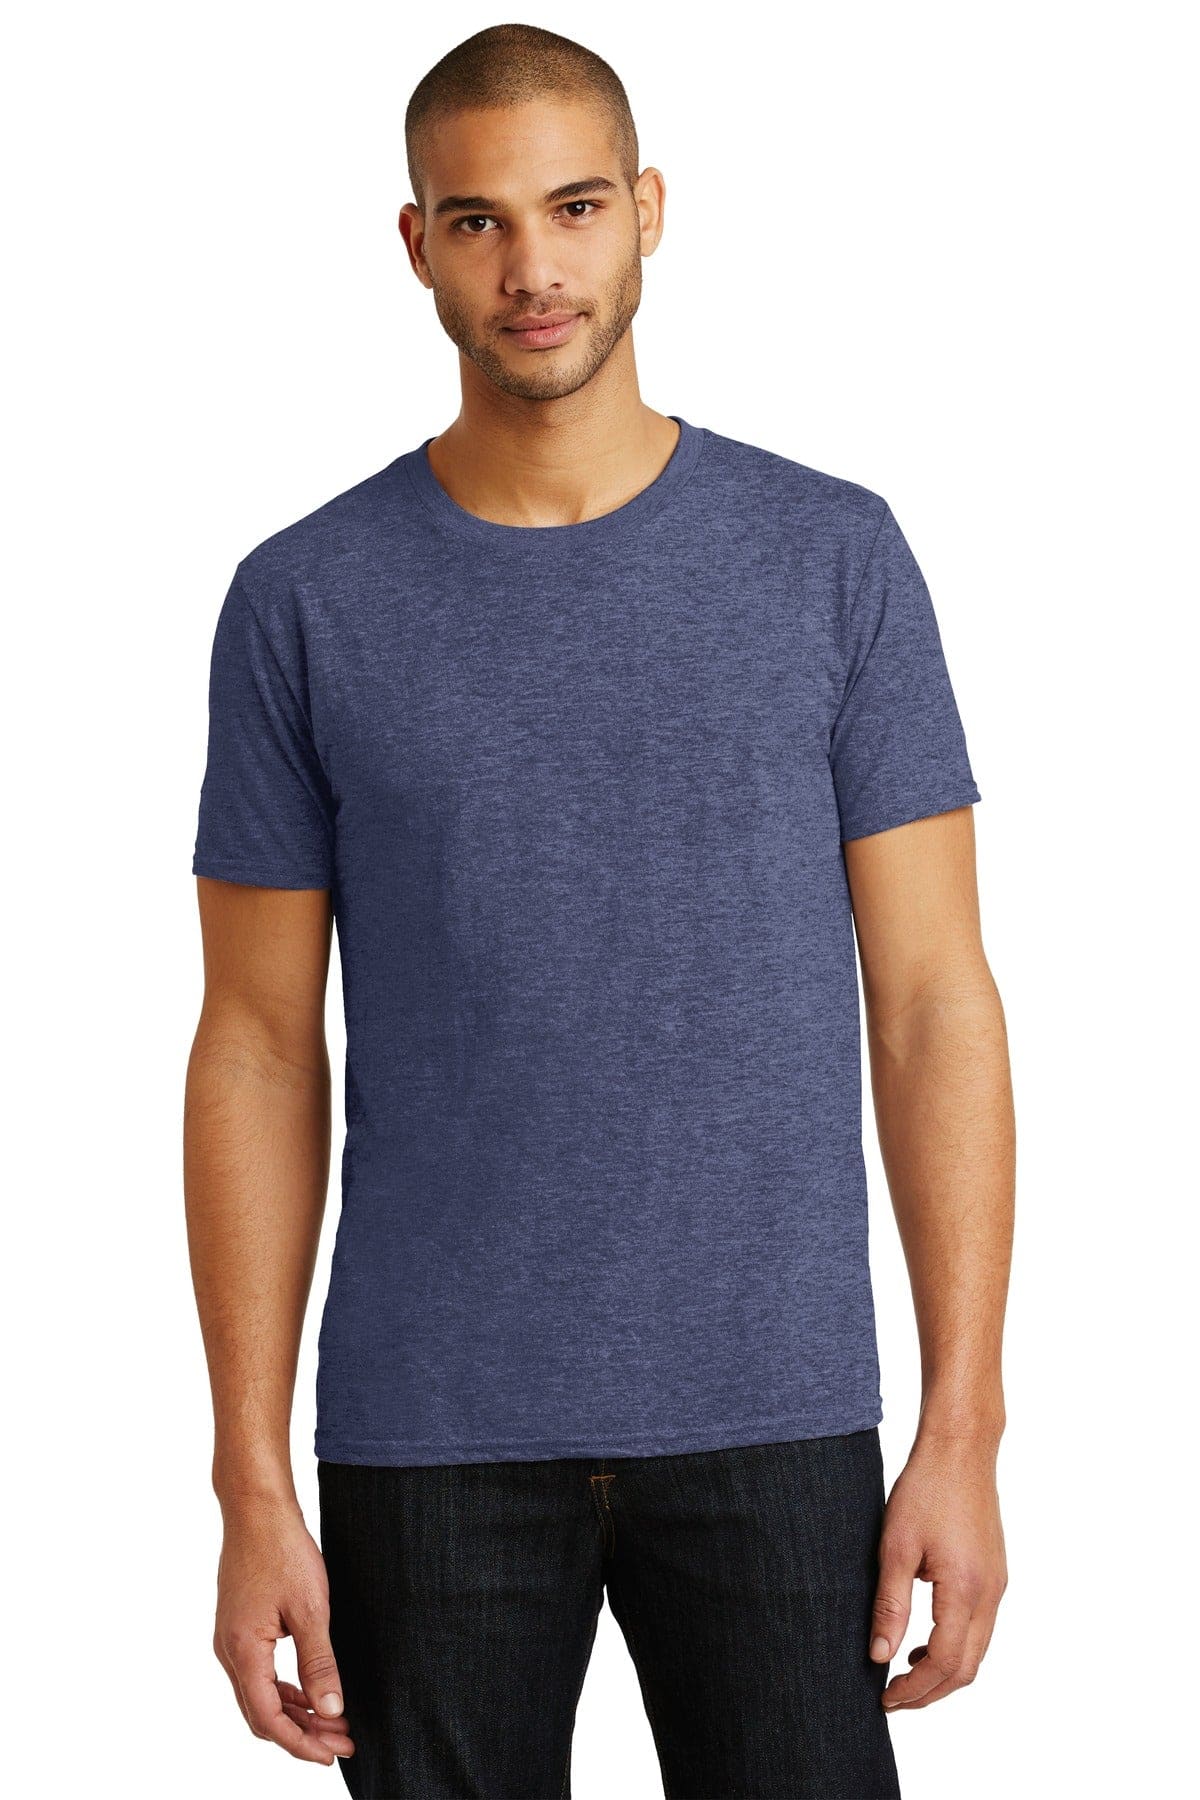 Gildan Tri - blend Tee 6750 - Activewear T - Tops / Shirtss